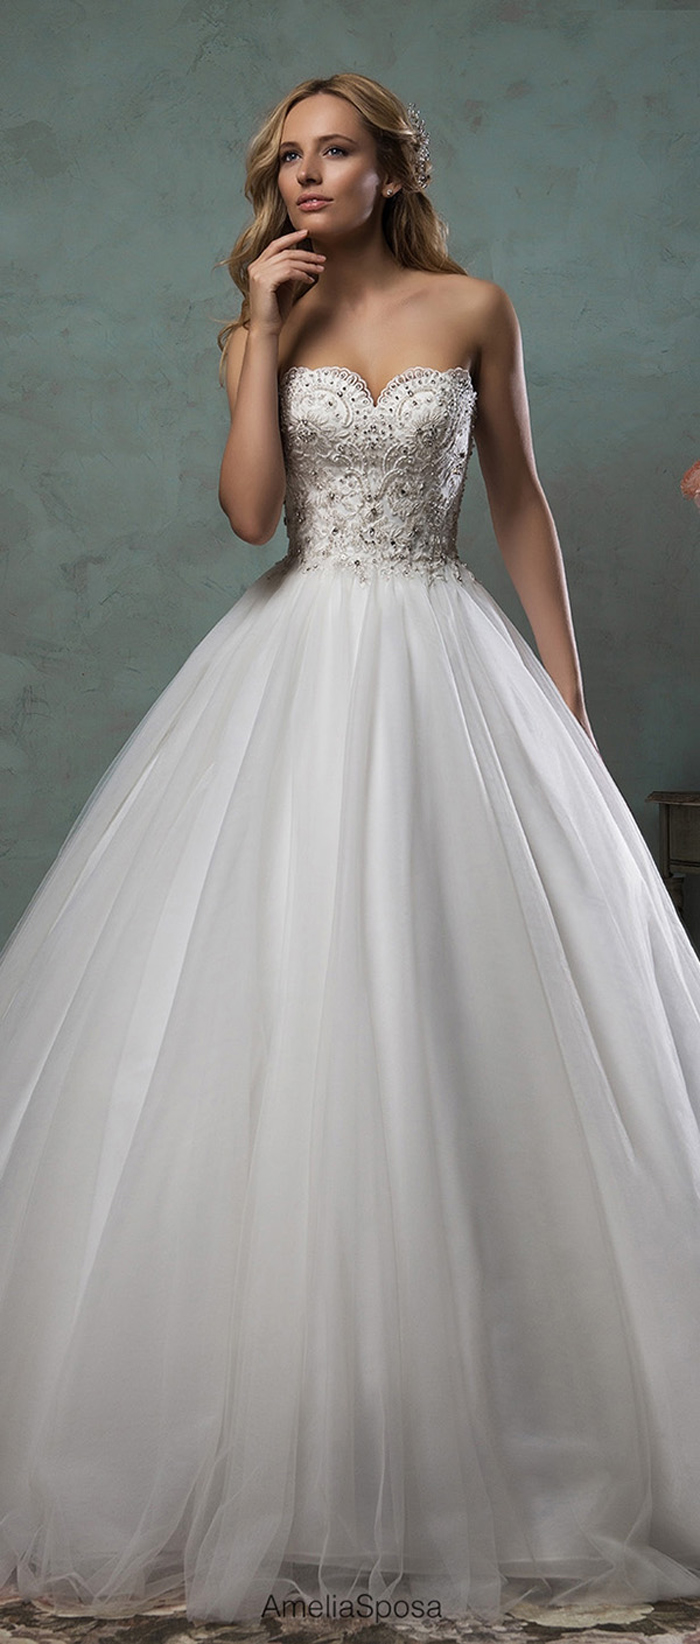 sparkling white wedding dress